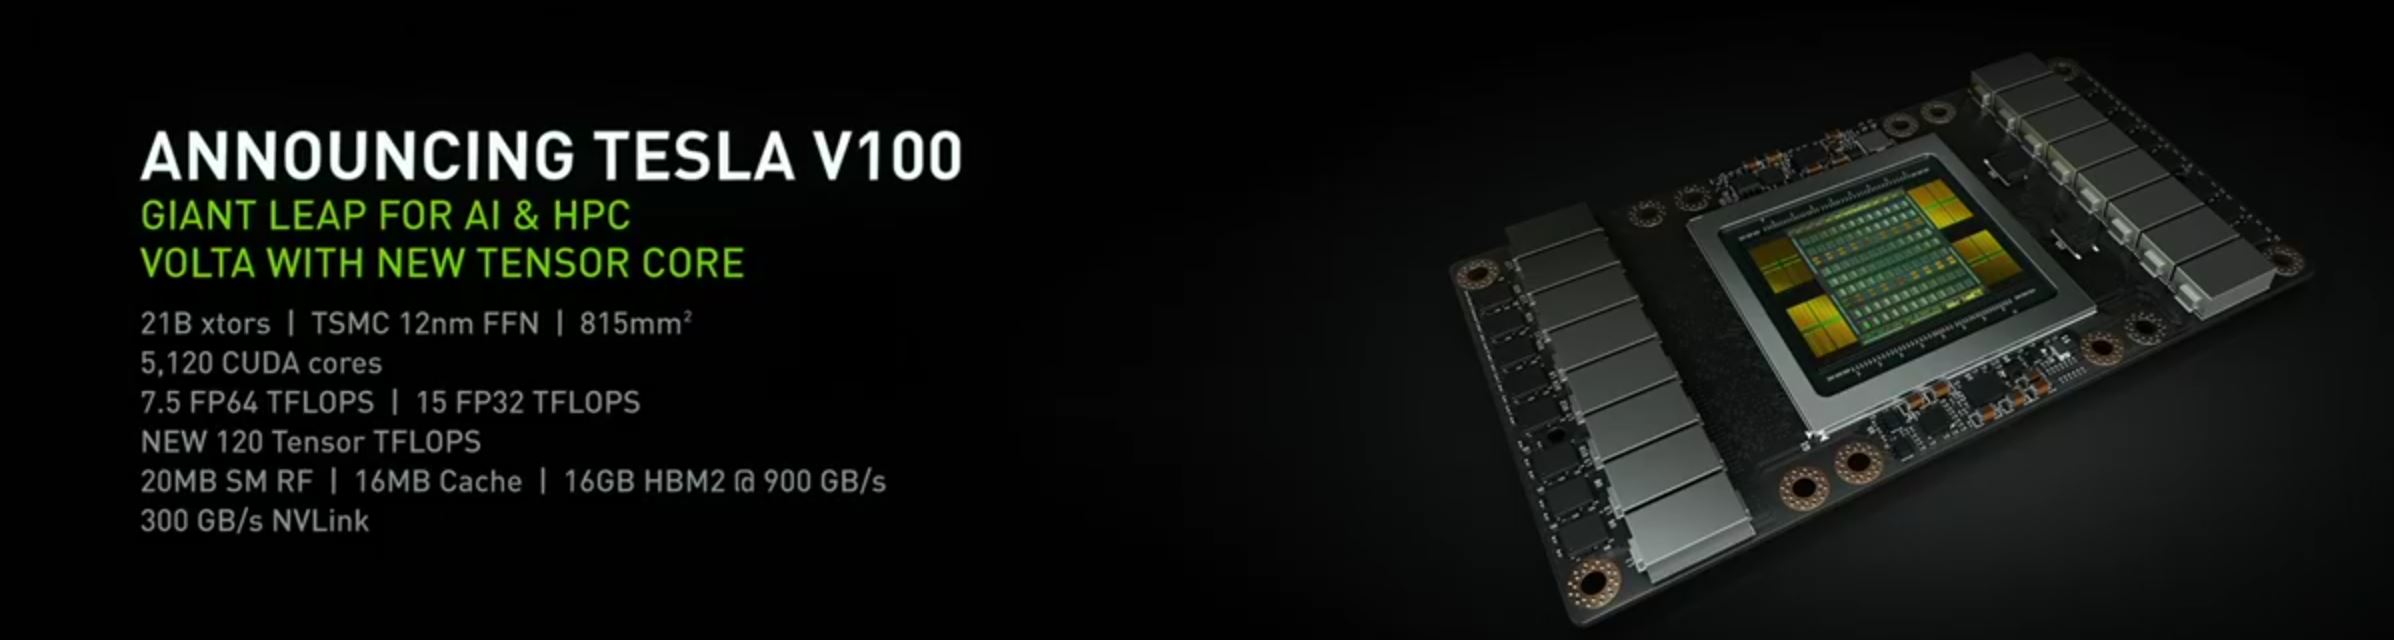 NVIDIA announces TESLA V100 with 5120 